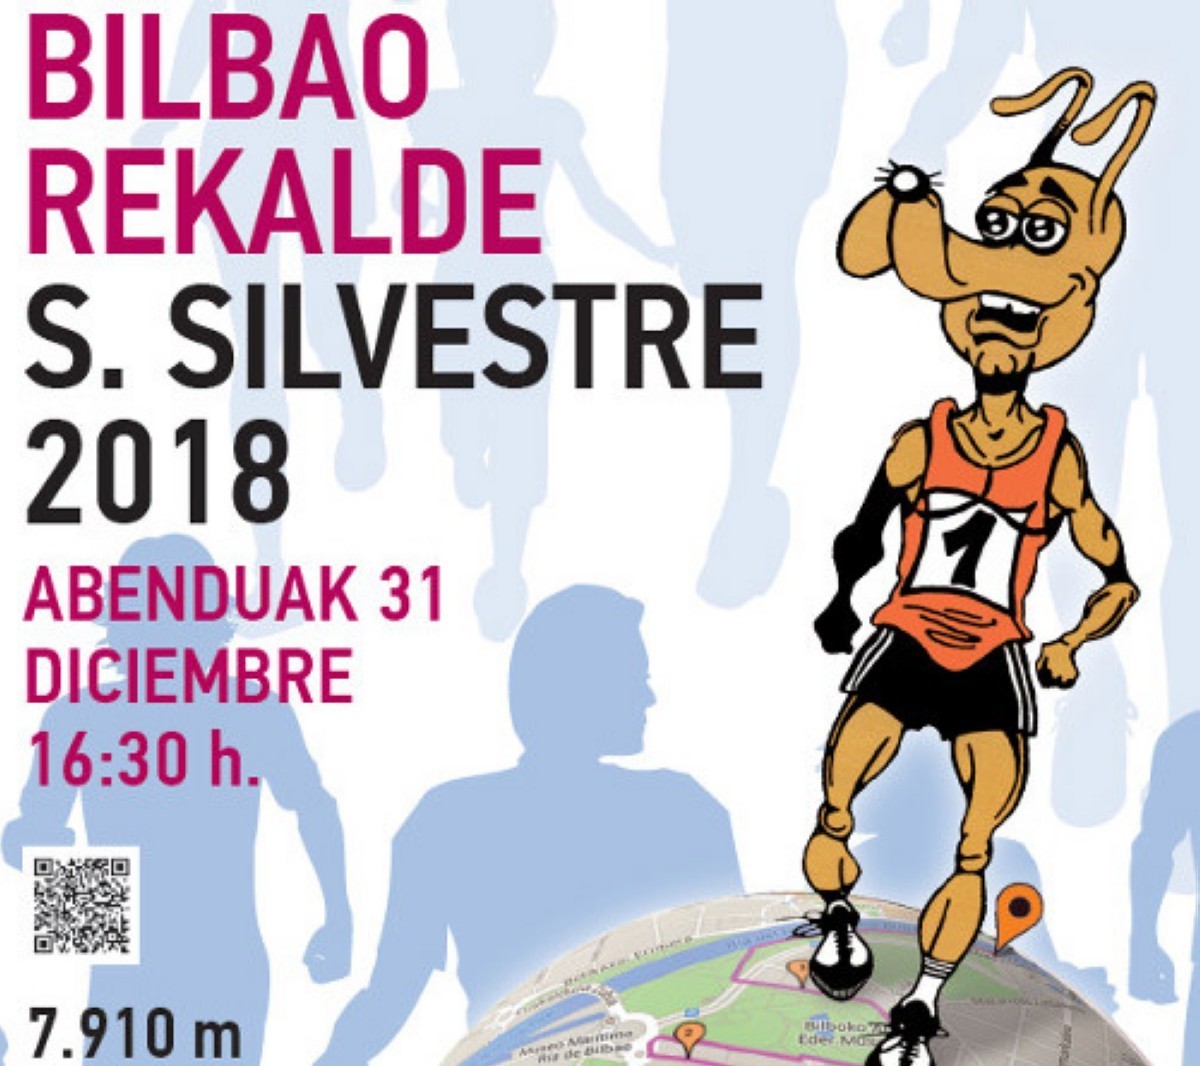 La San Silvestre Bilbao Rekalde 2018